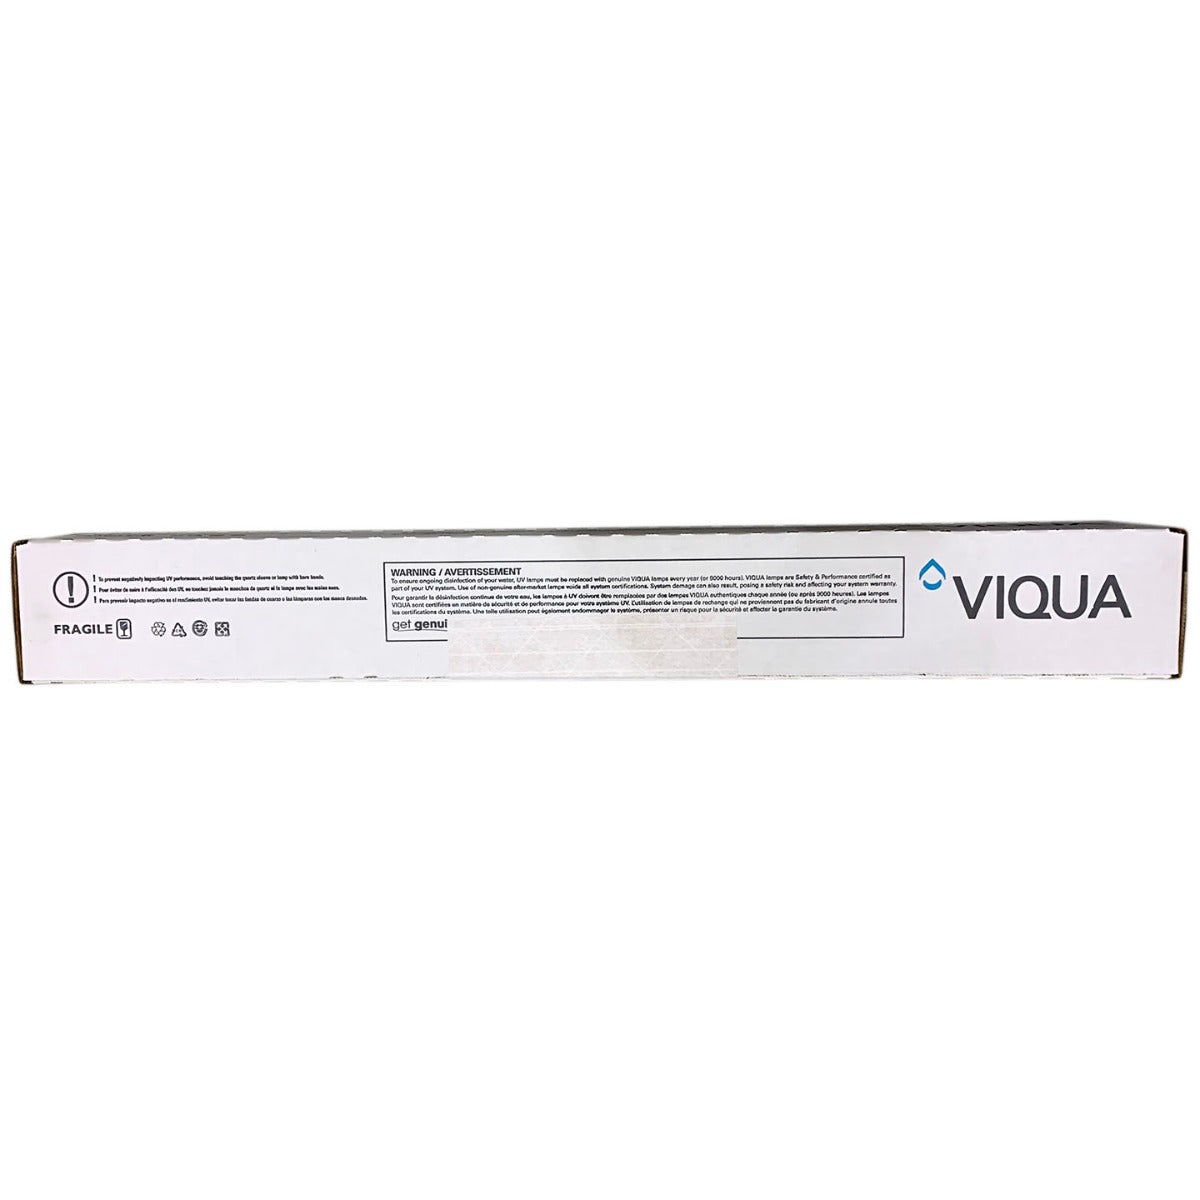 602732 Quartz Sleeve for UV Lamp 602805 by Viqua